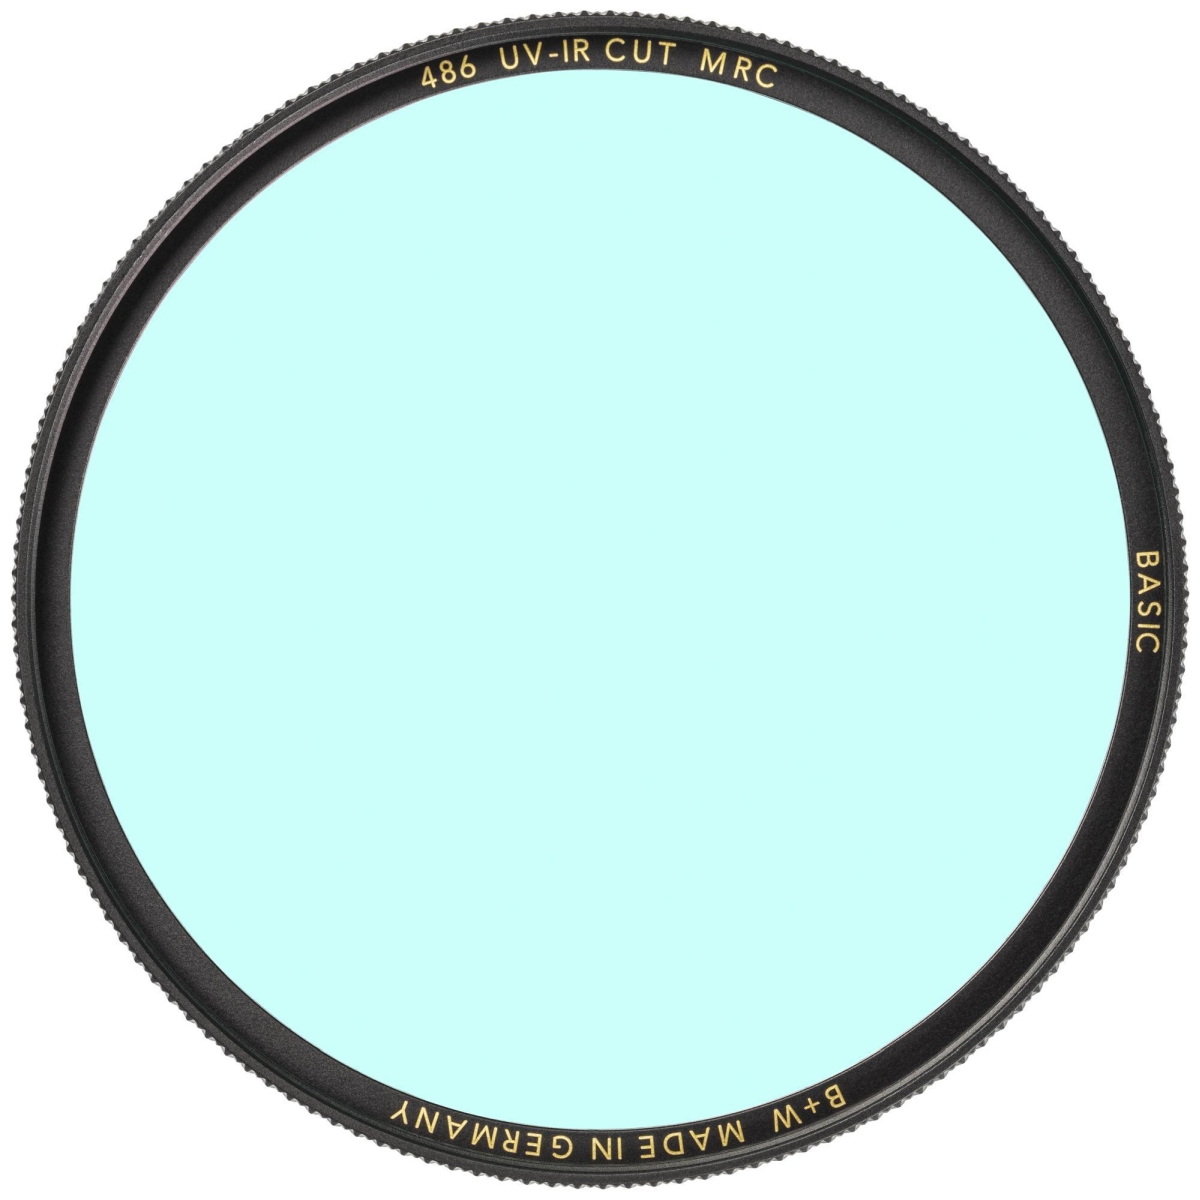 B+W UV-IR Cut 86 mm MRC Basic